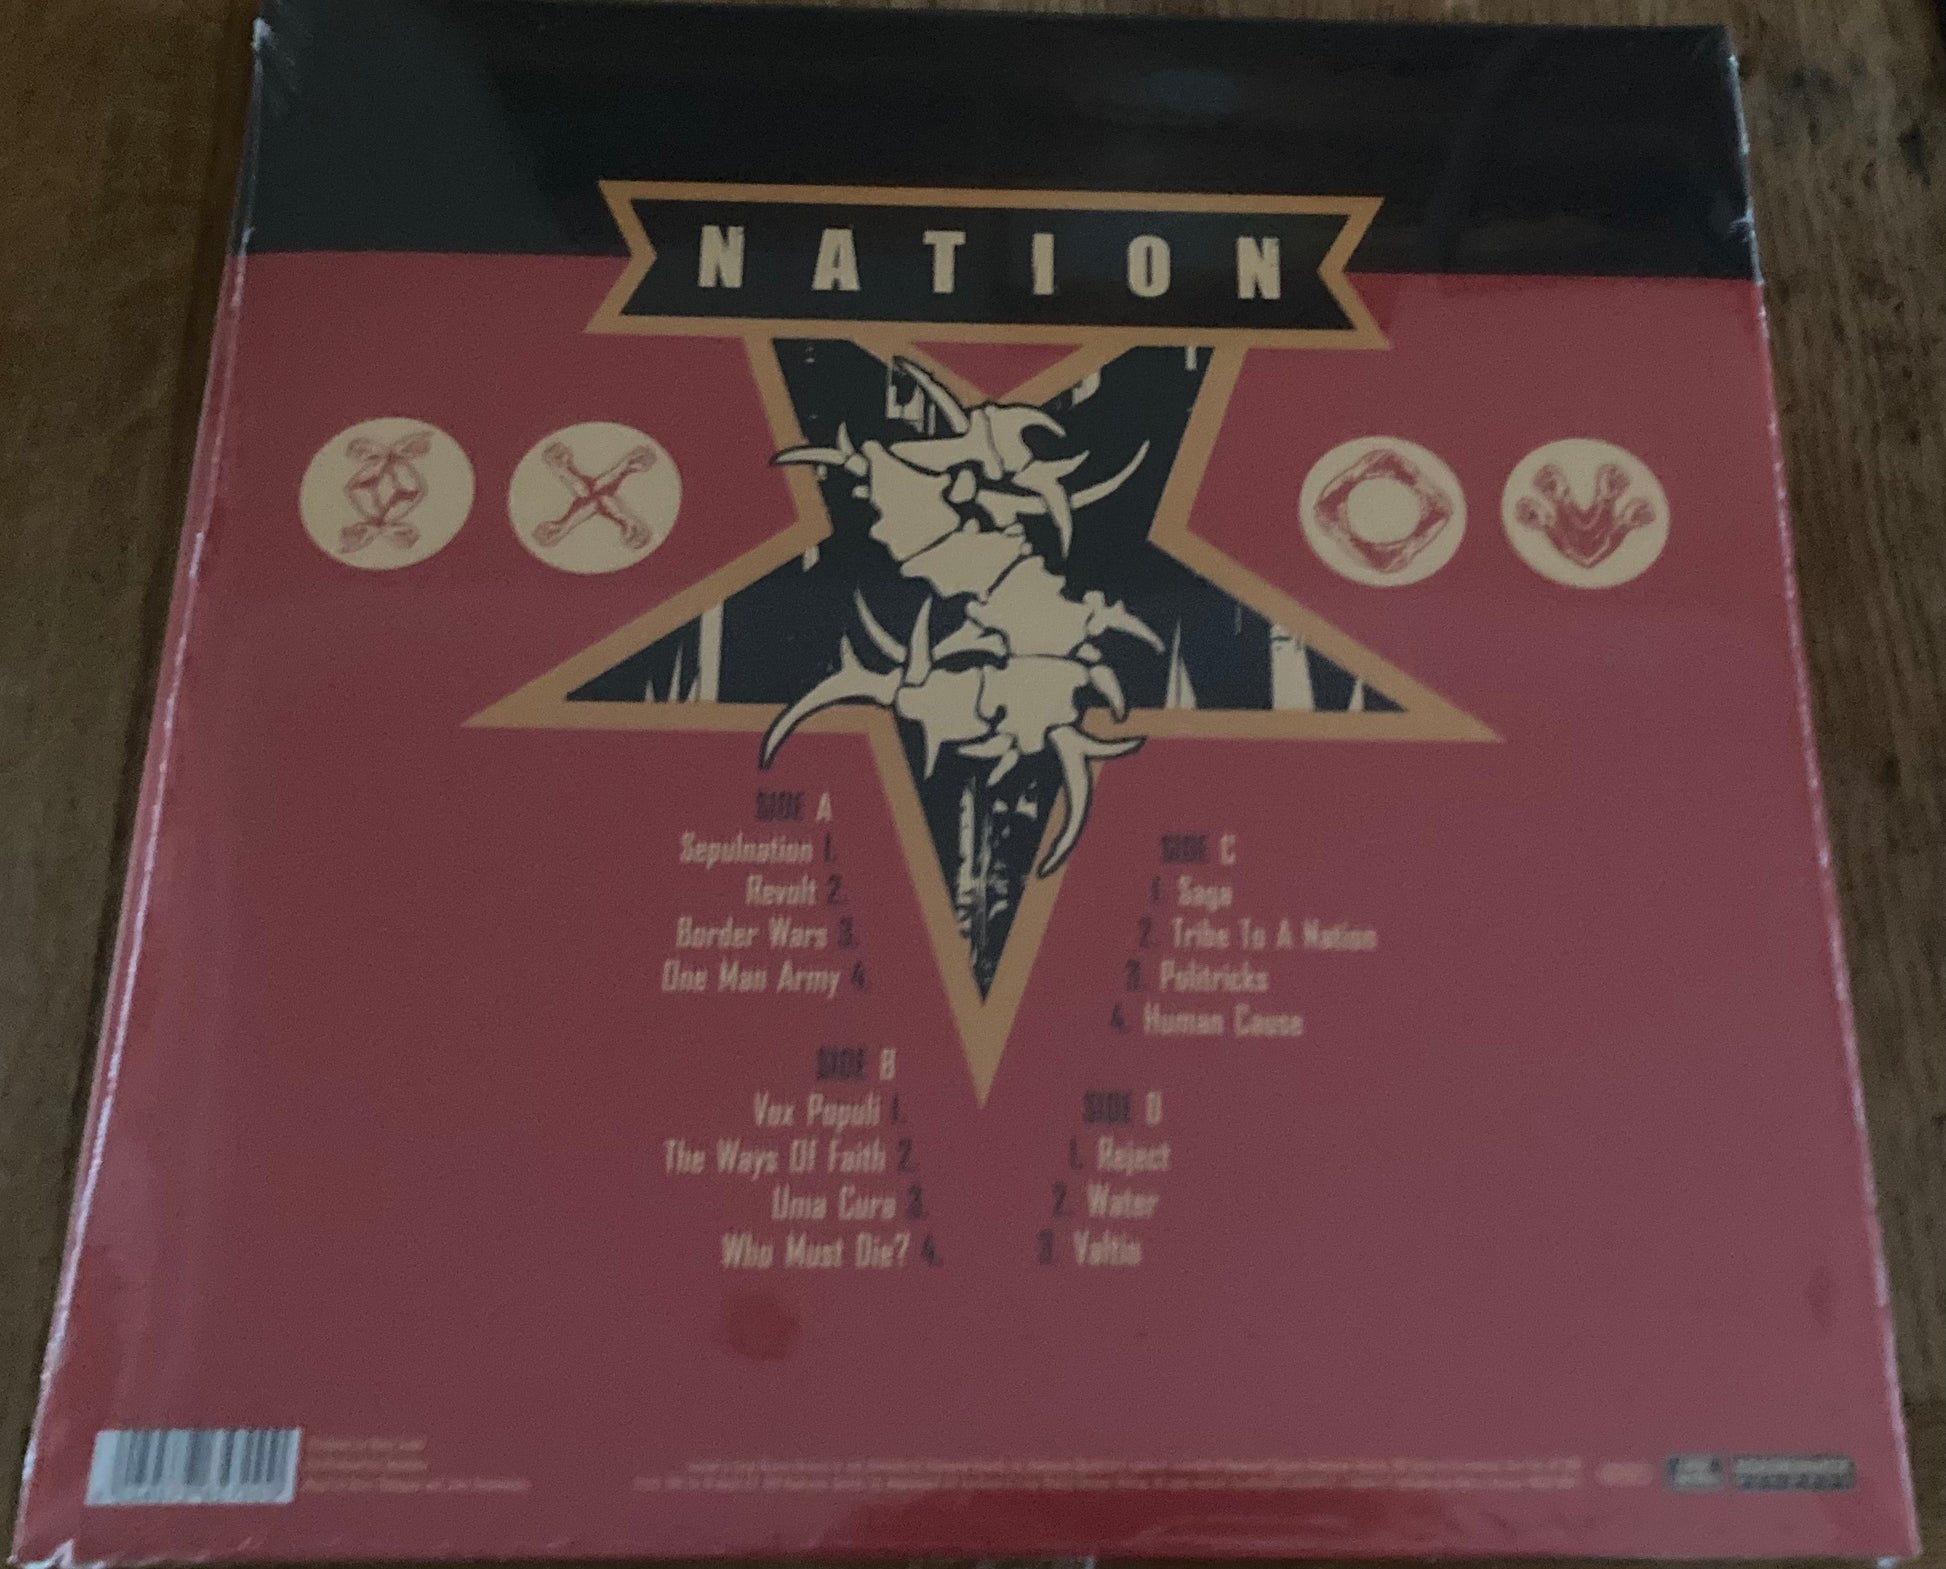 The back of Sepultura - Nation on vinyl